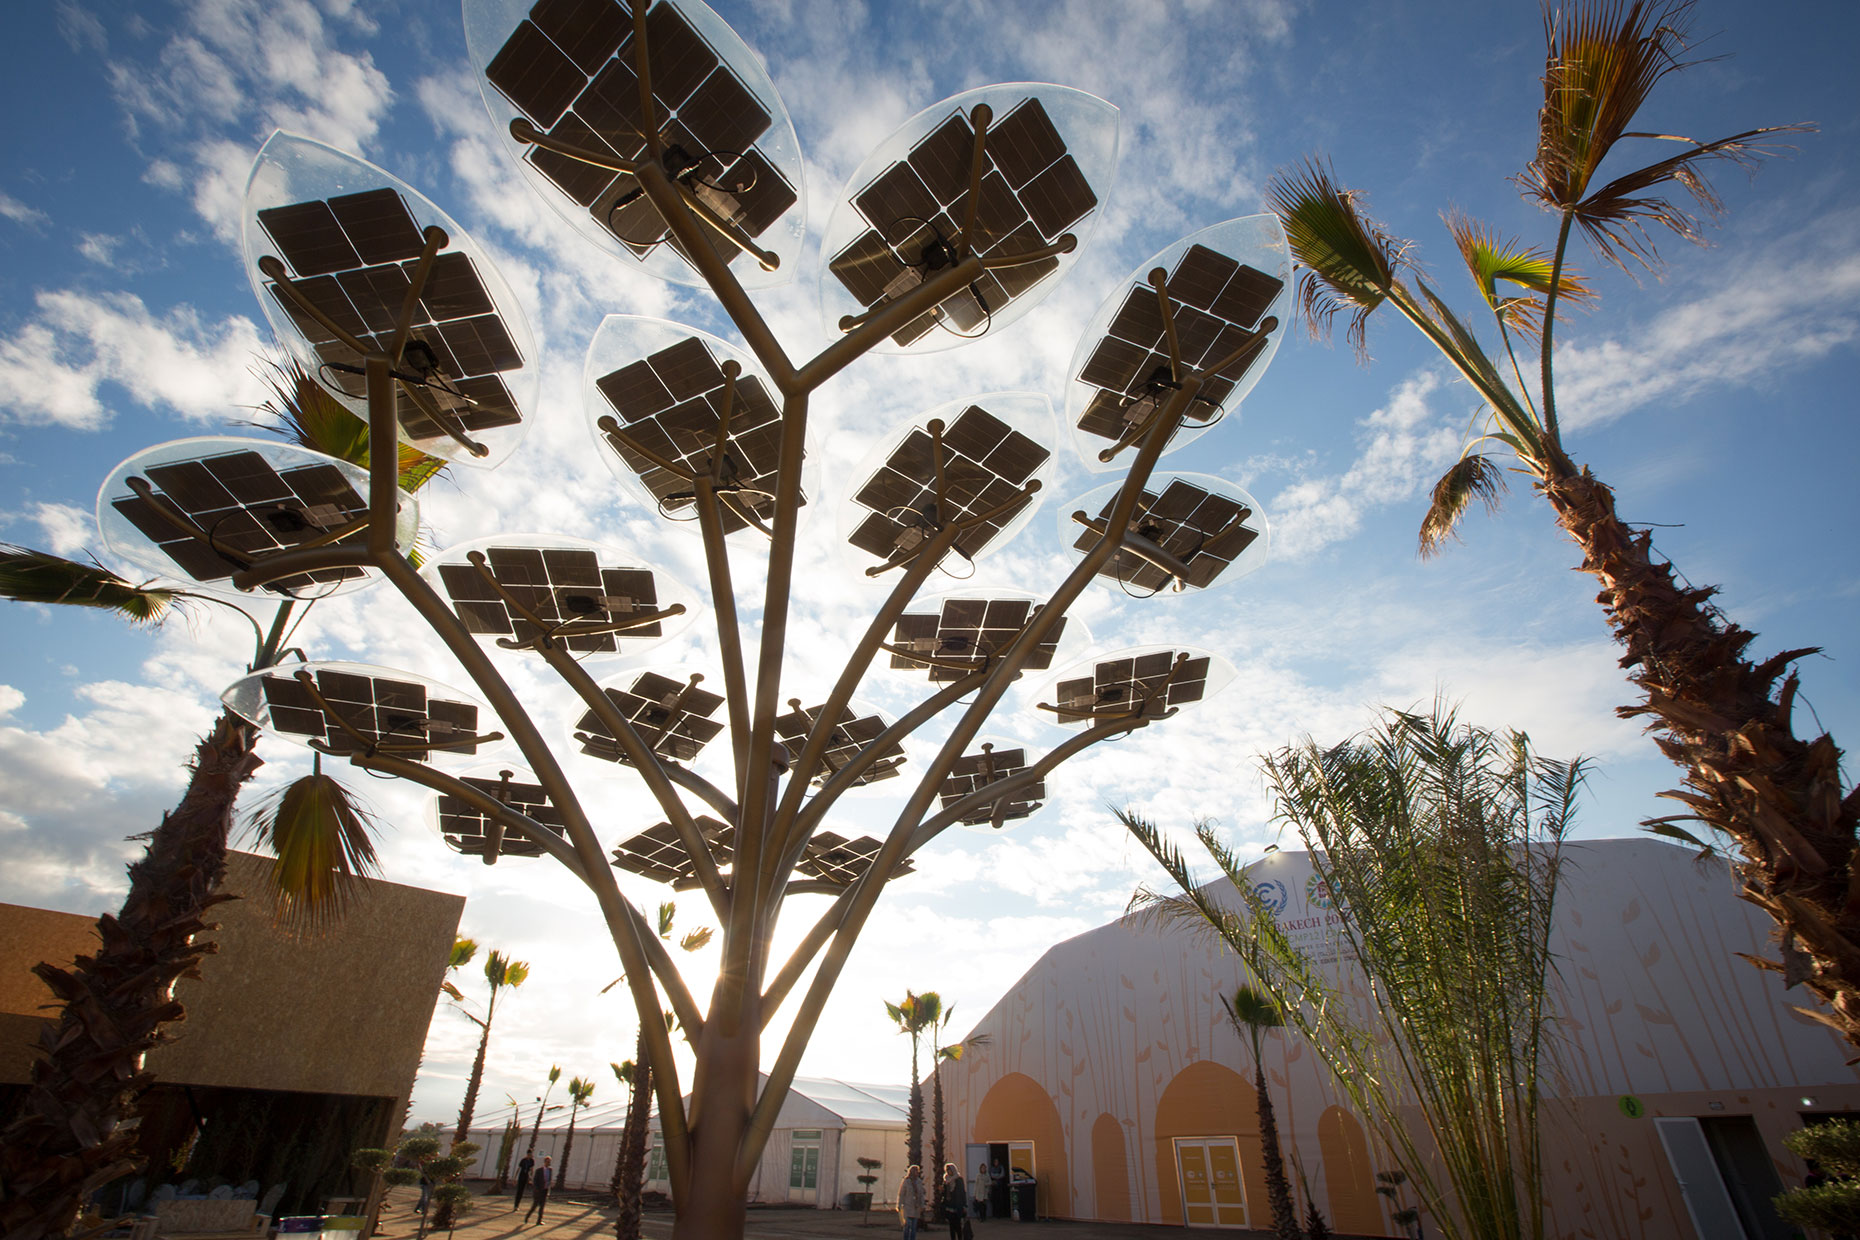 Solar panels tree, by Scotland Greenpeace photographer